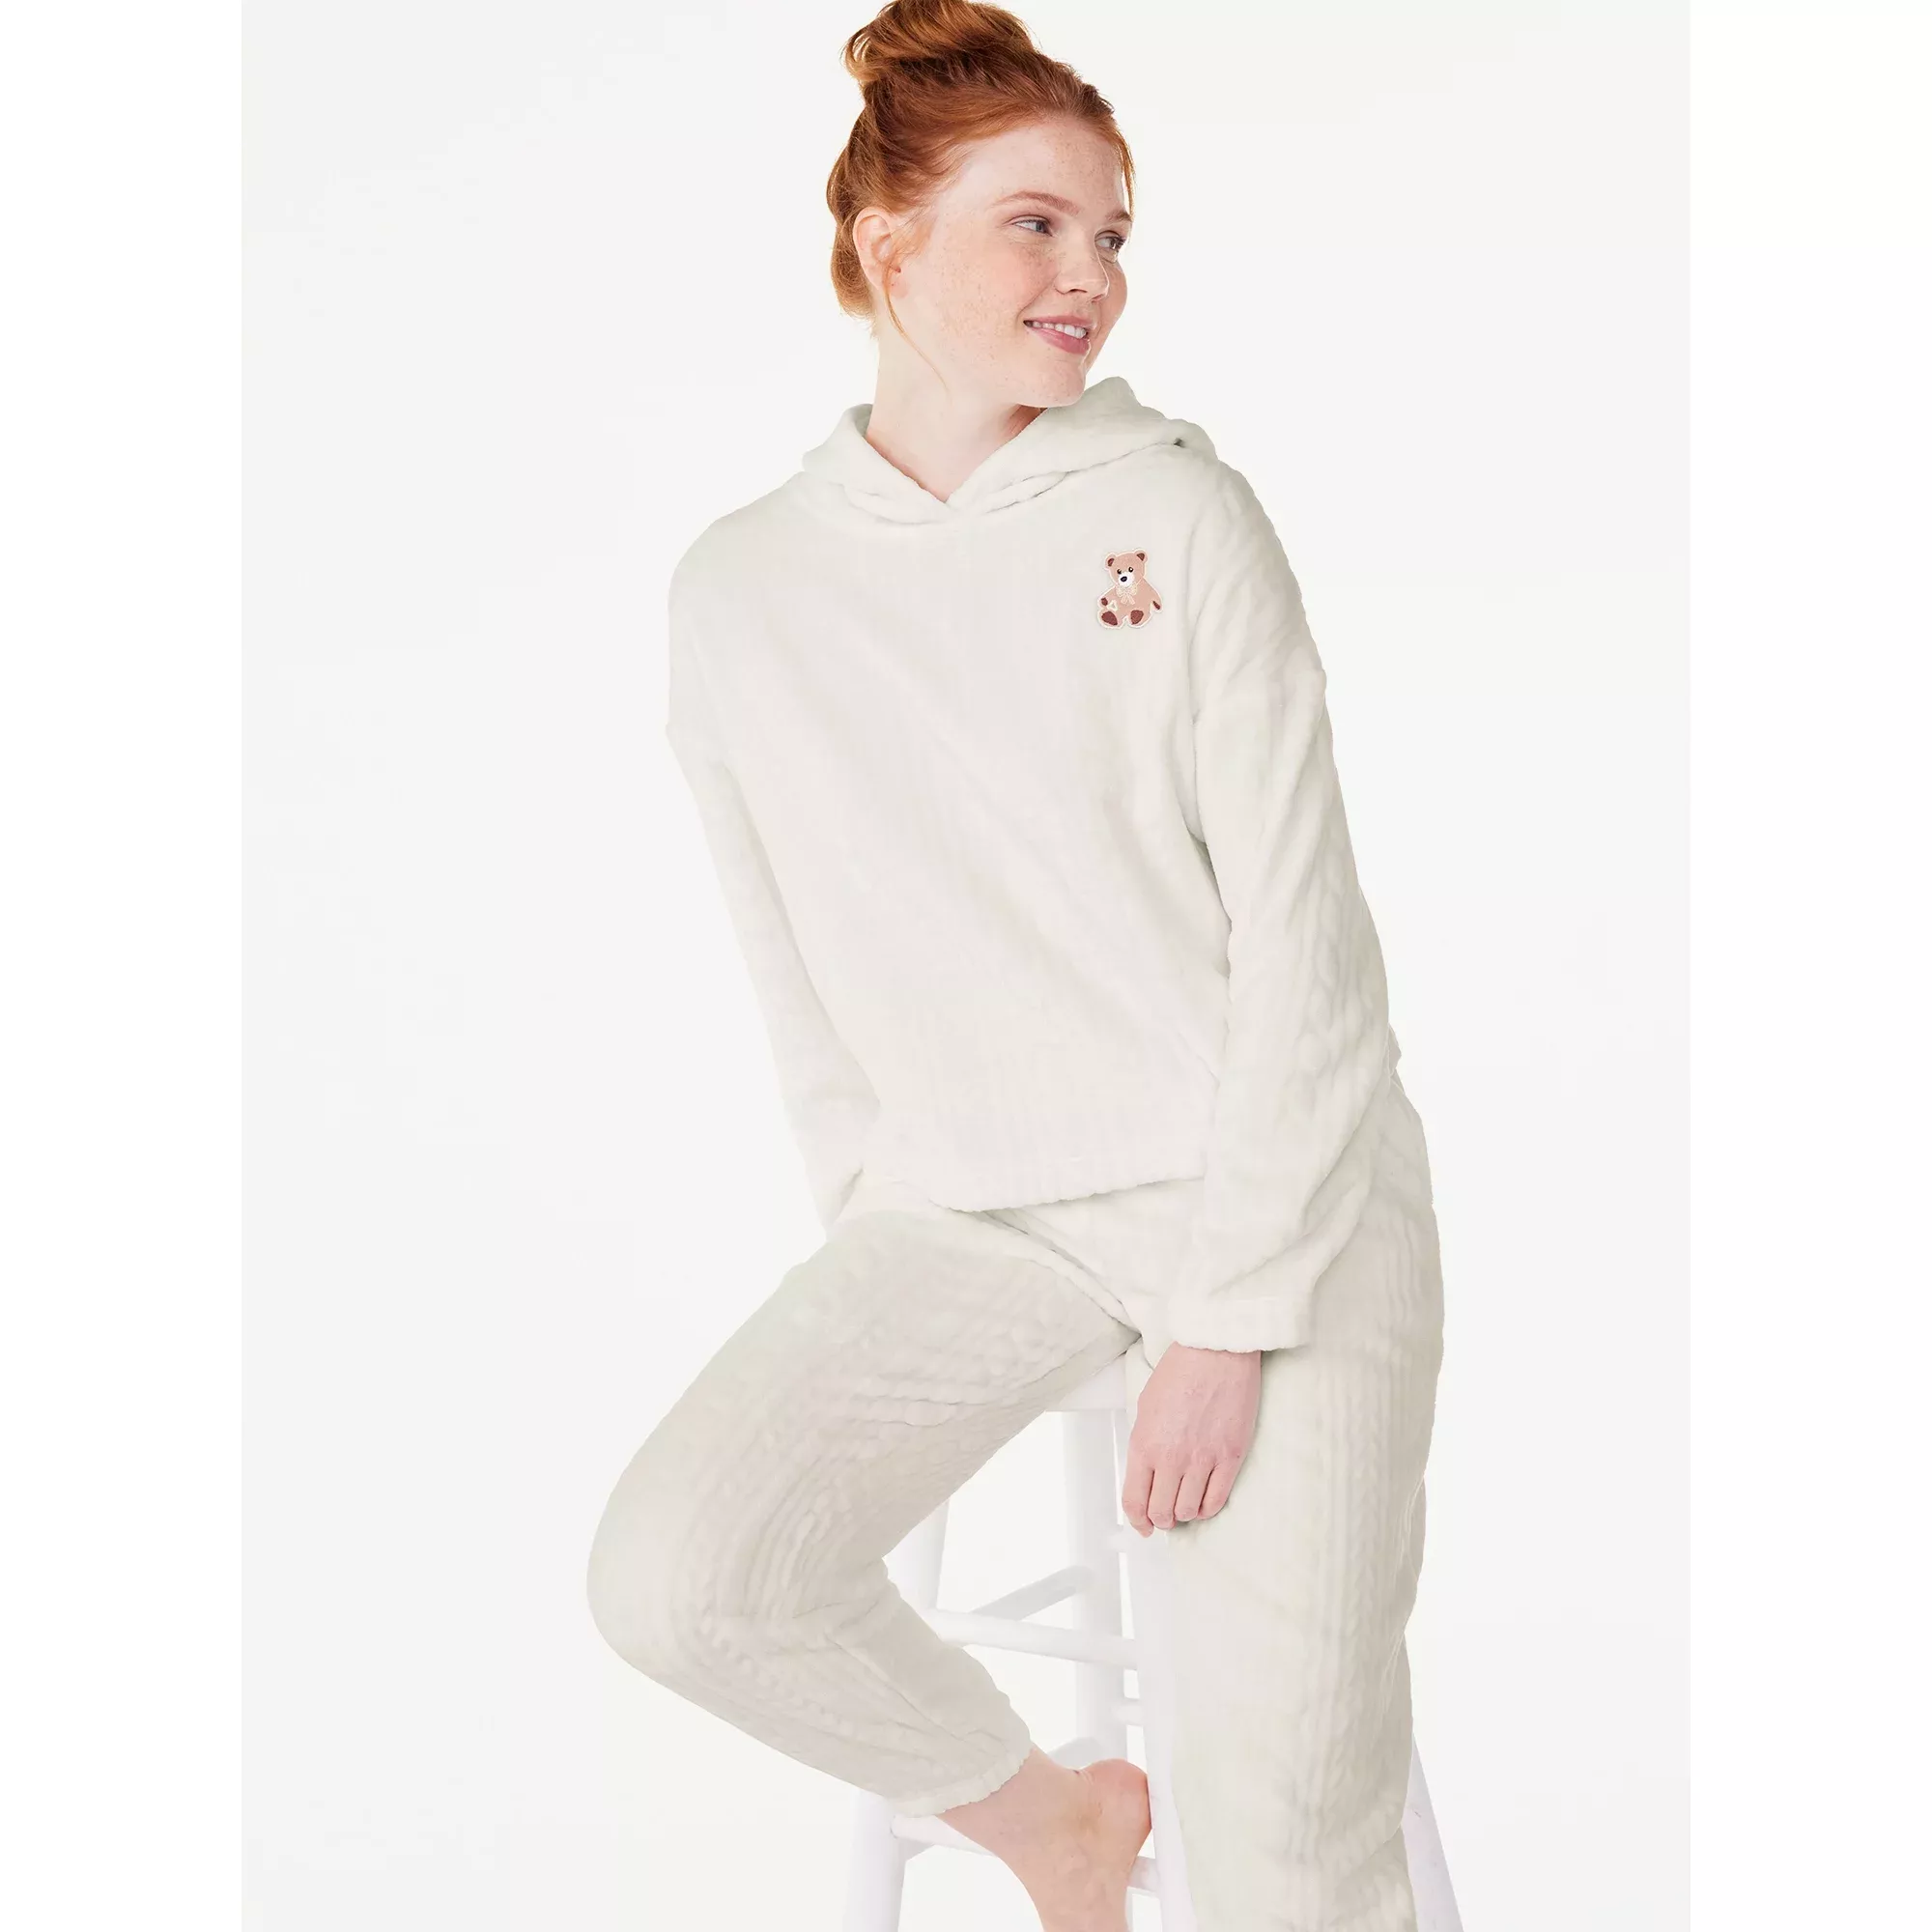 Joyspun Women’s Plush Hooded Top and Pants, 2-Piece Pajama Set, Sizes XS to  3X